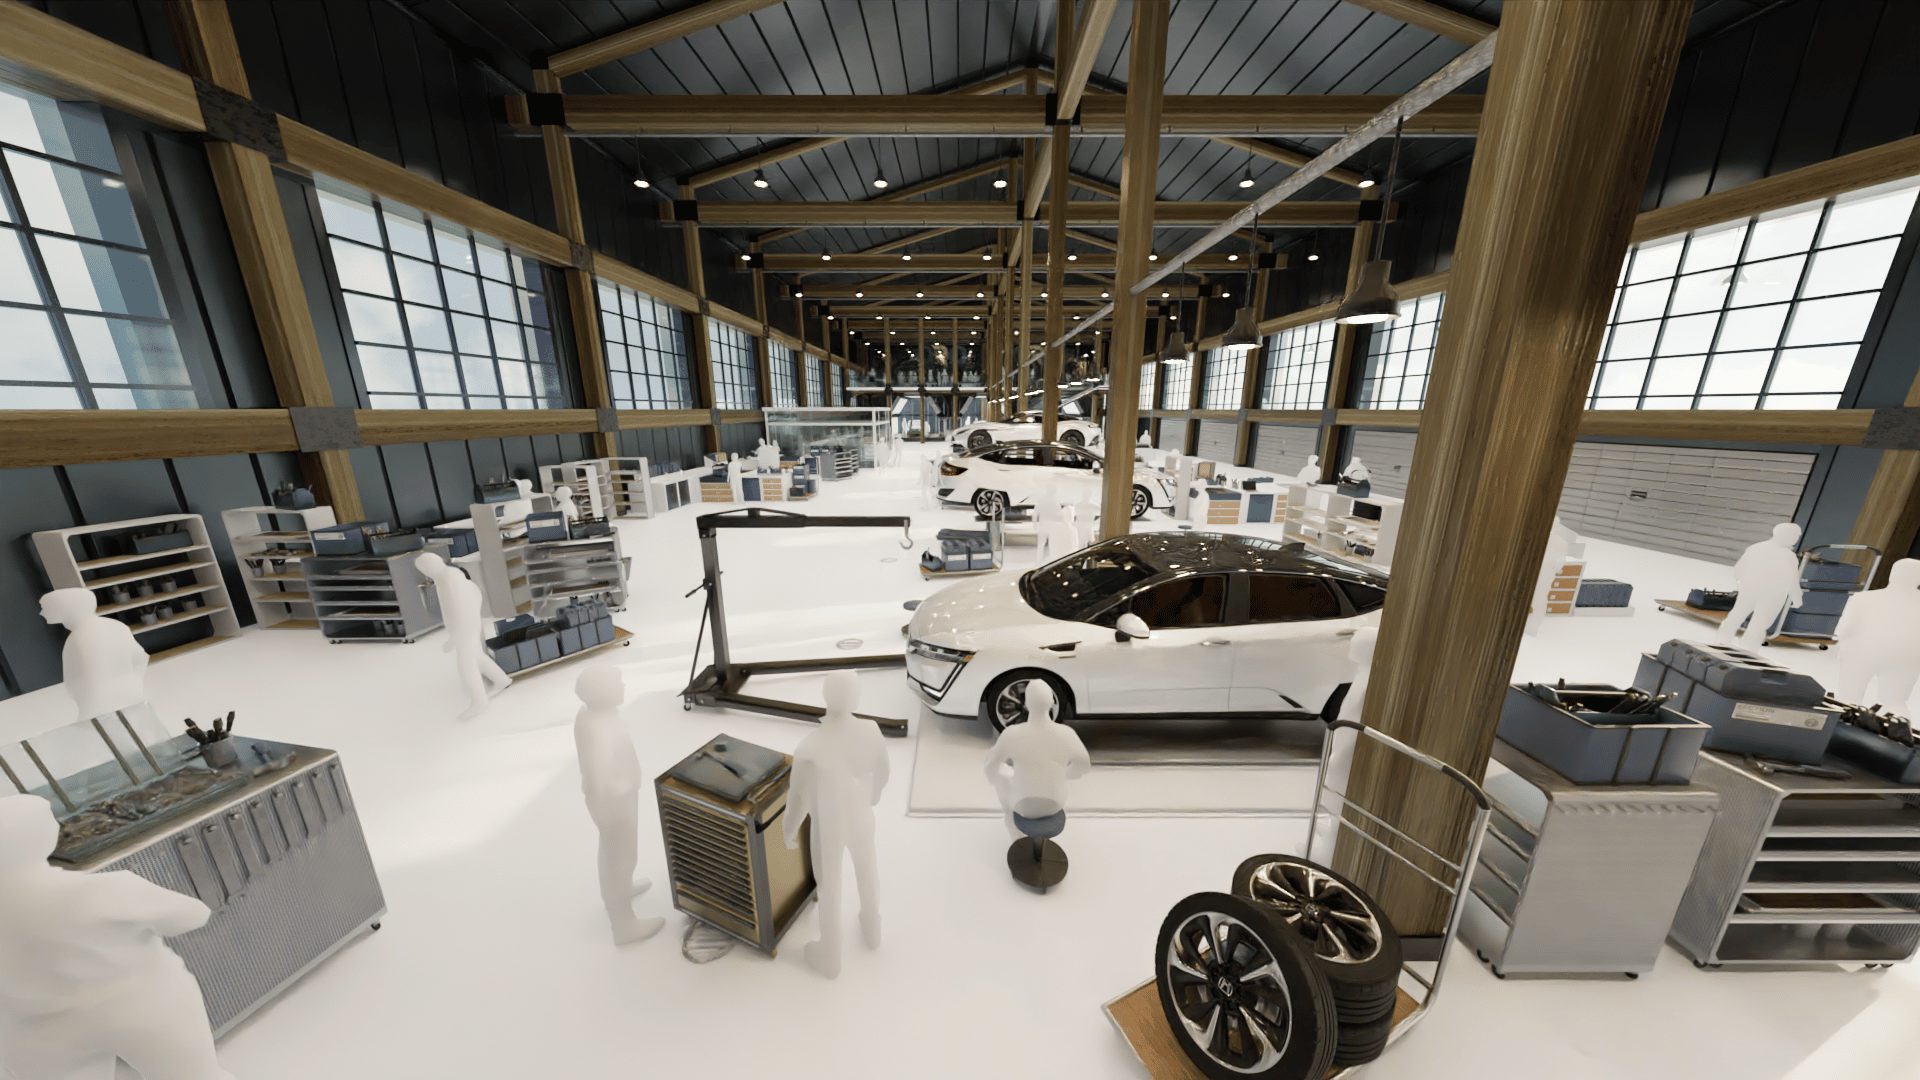 architectural visualisation of workshop interior